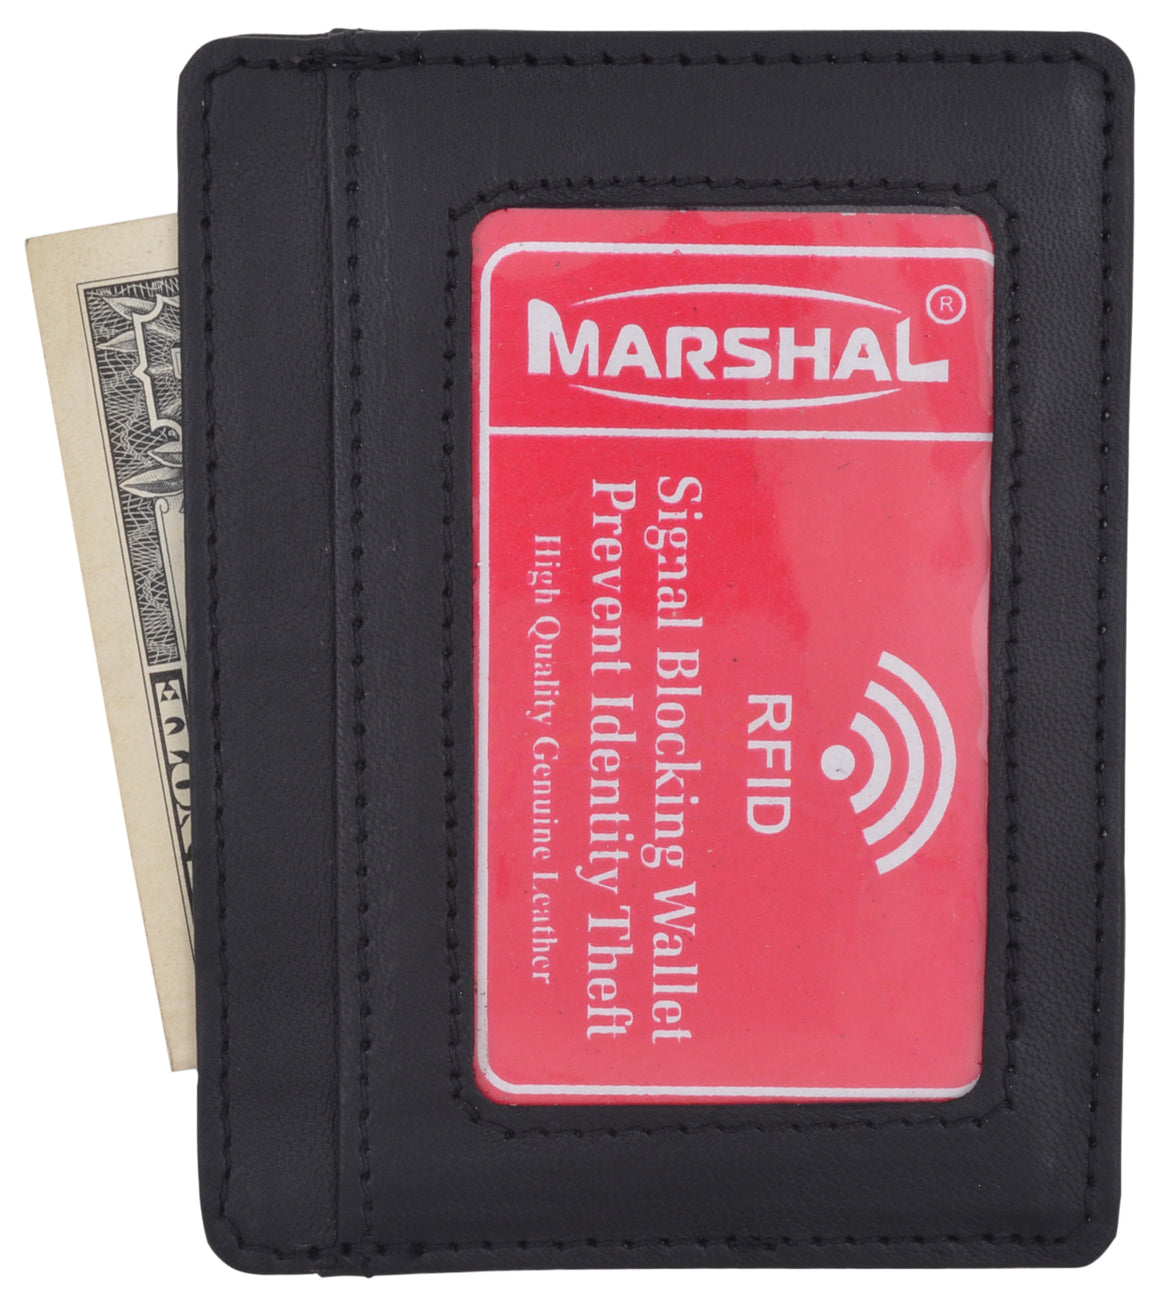 Slim Minimalist Wallets For Men Women - Leather Front Pocket Thin Mens Wallet RFID Credit Card Holder Gifts For Men-menswallet